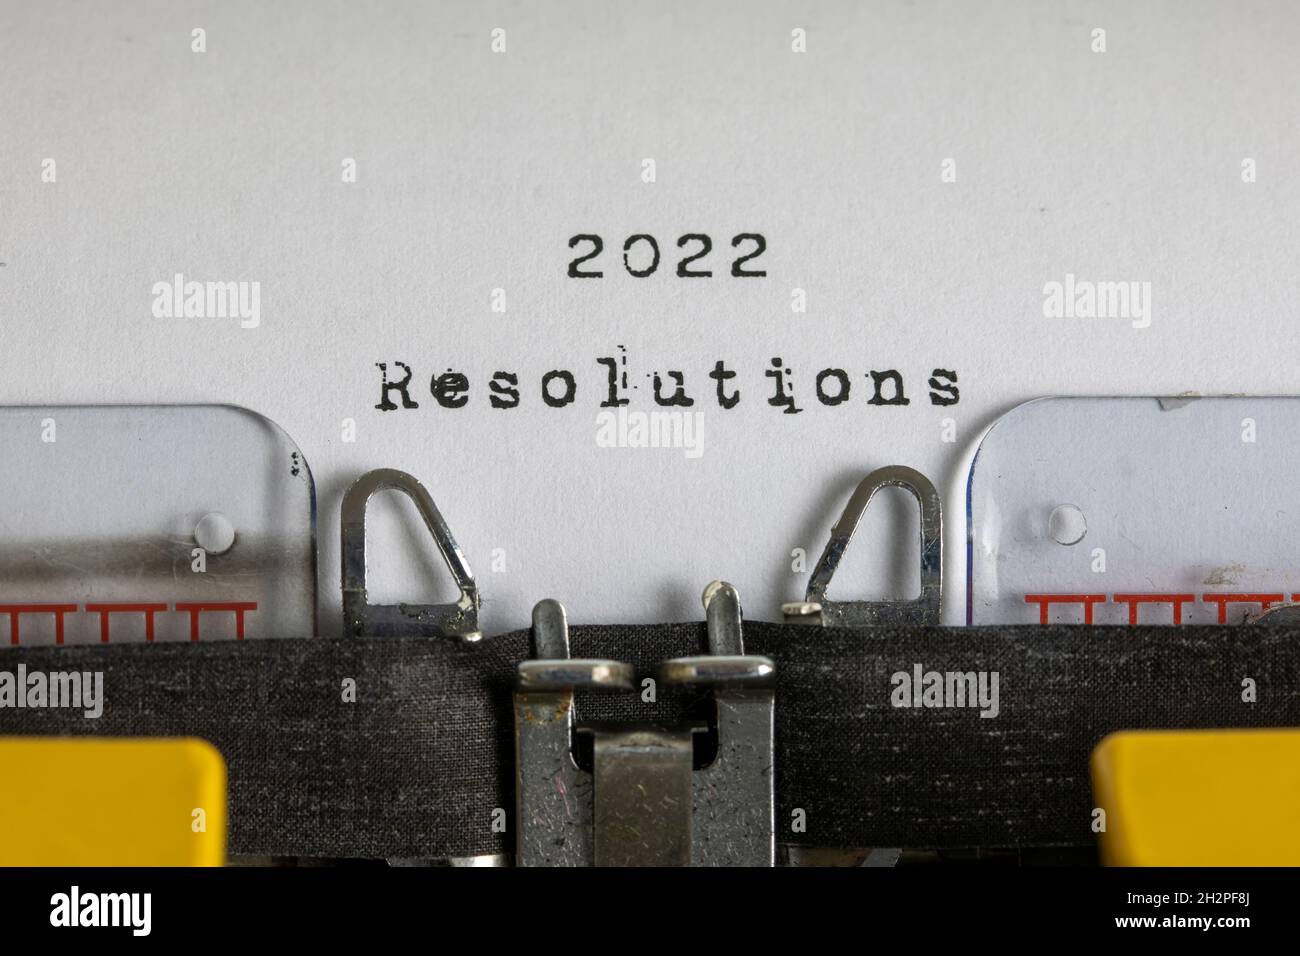 2022 Resolutions written on an old typewriter Stock Photo - Alamy